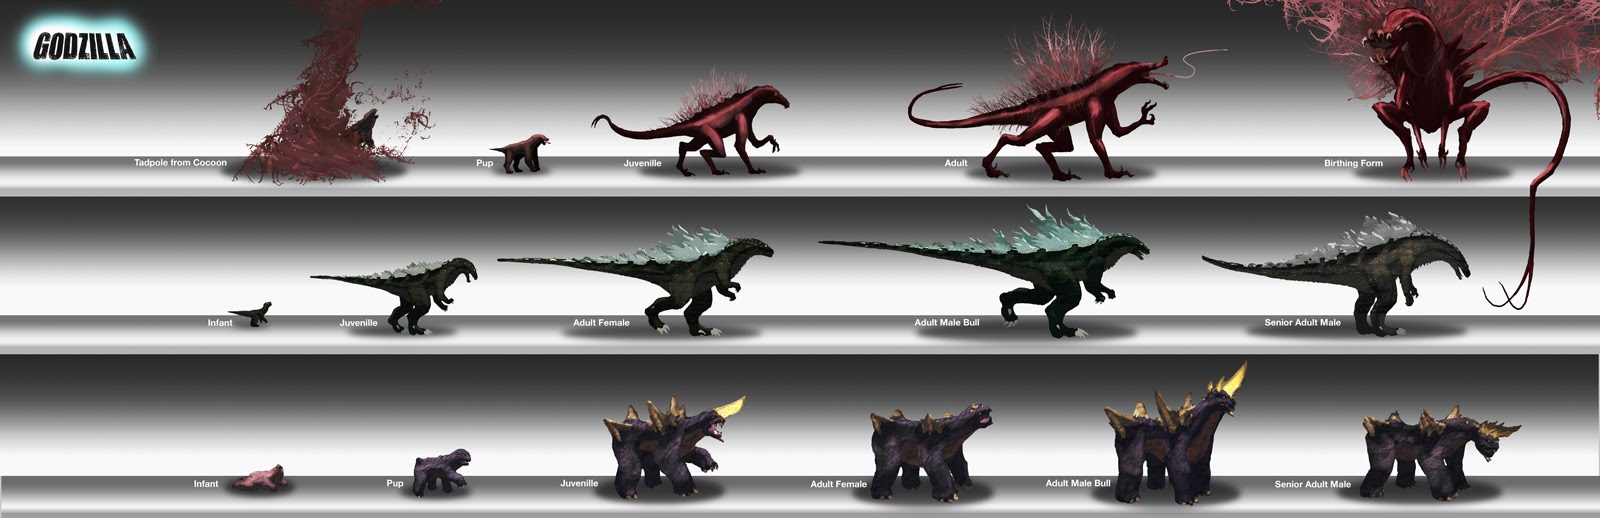 Potential Godzilla 2014 Concept Artwork Monster Evolution Godzilla Fan Artwork Image Gallery